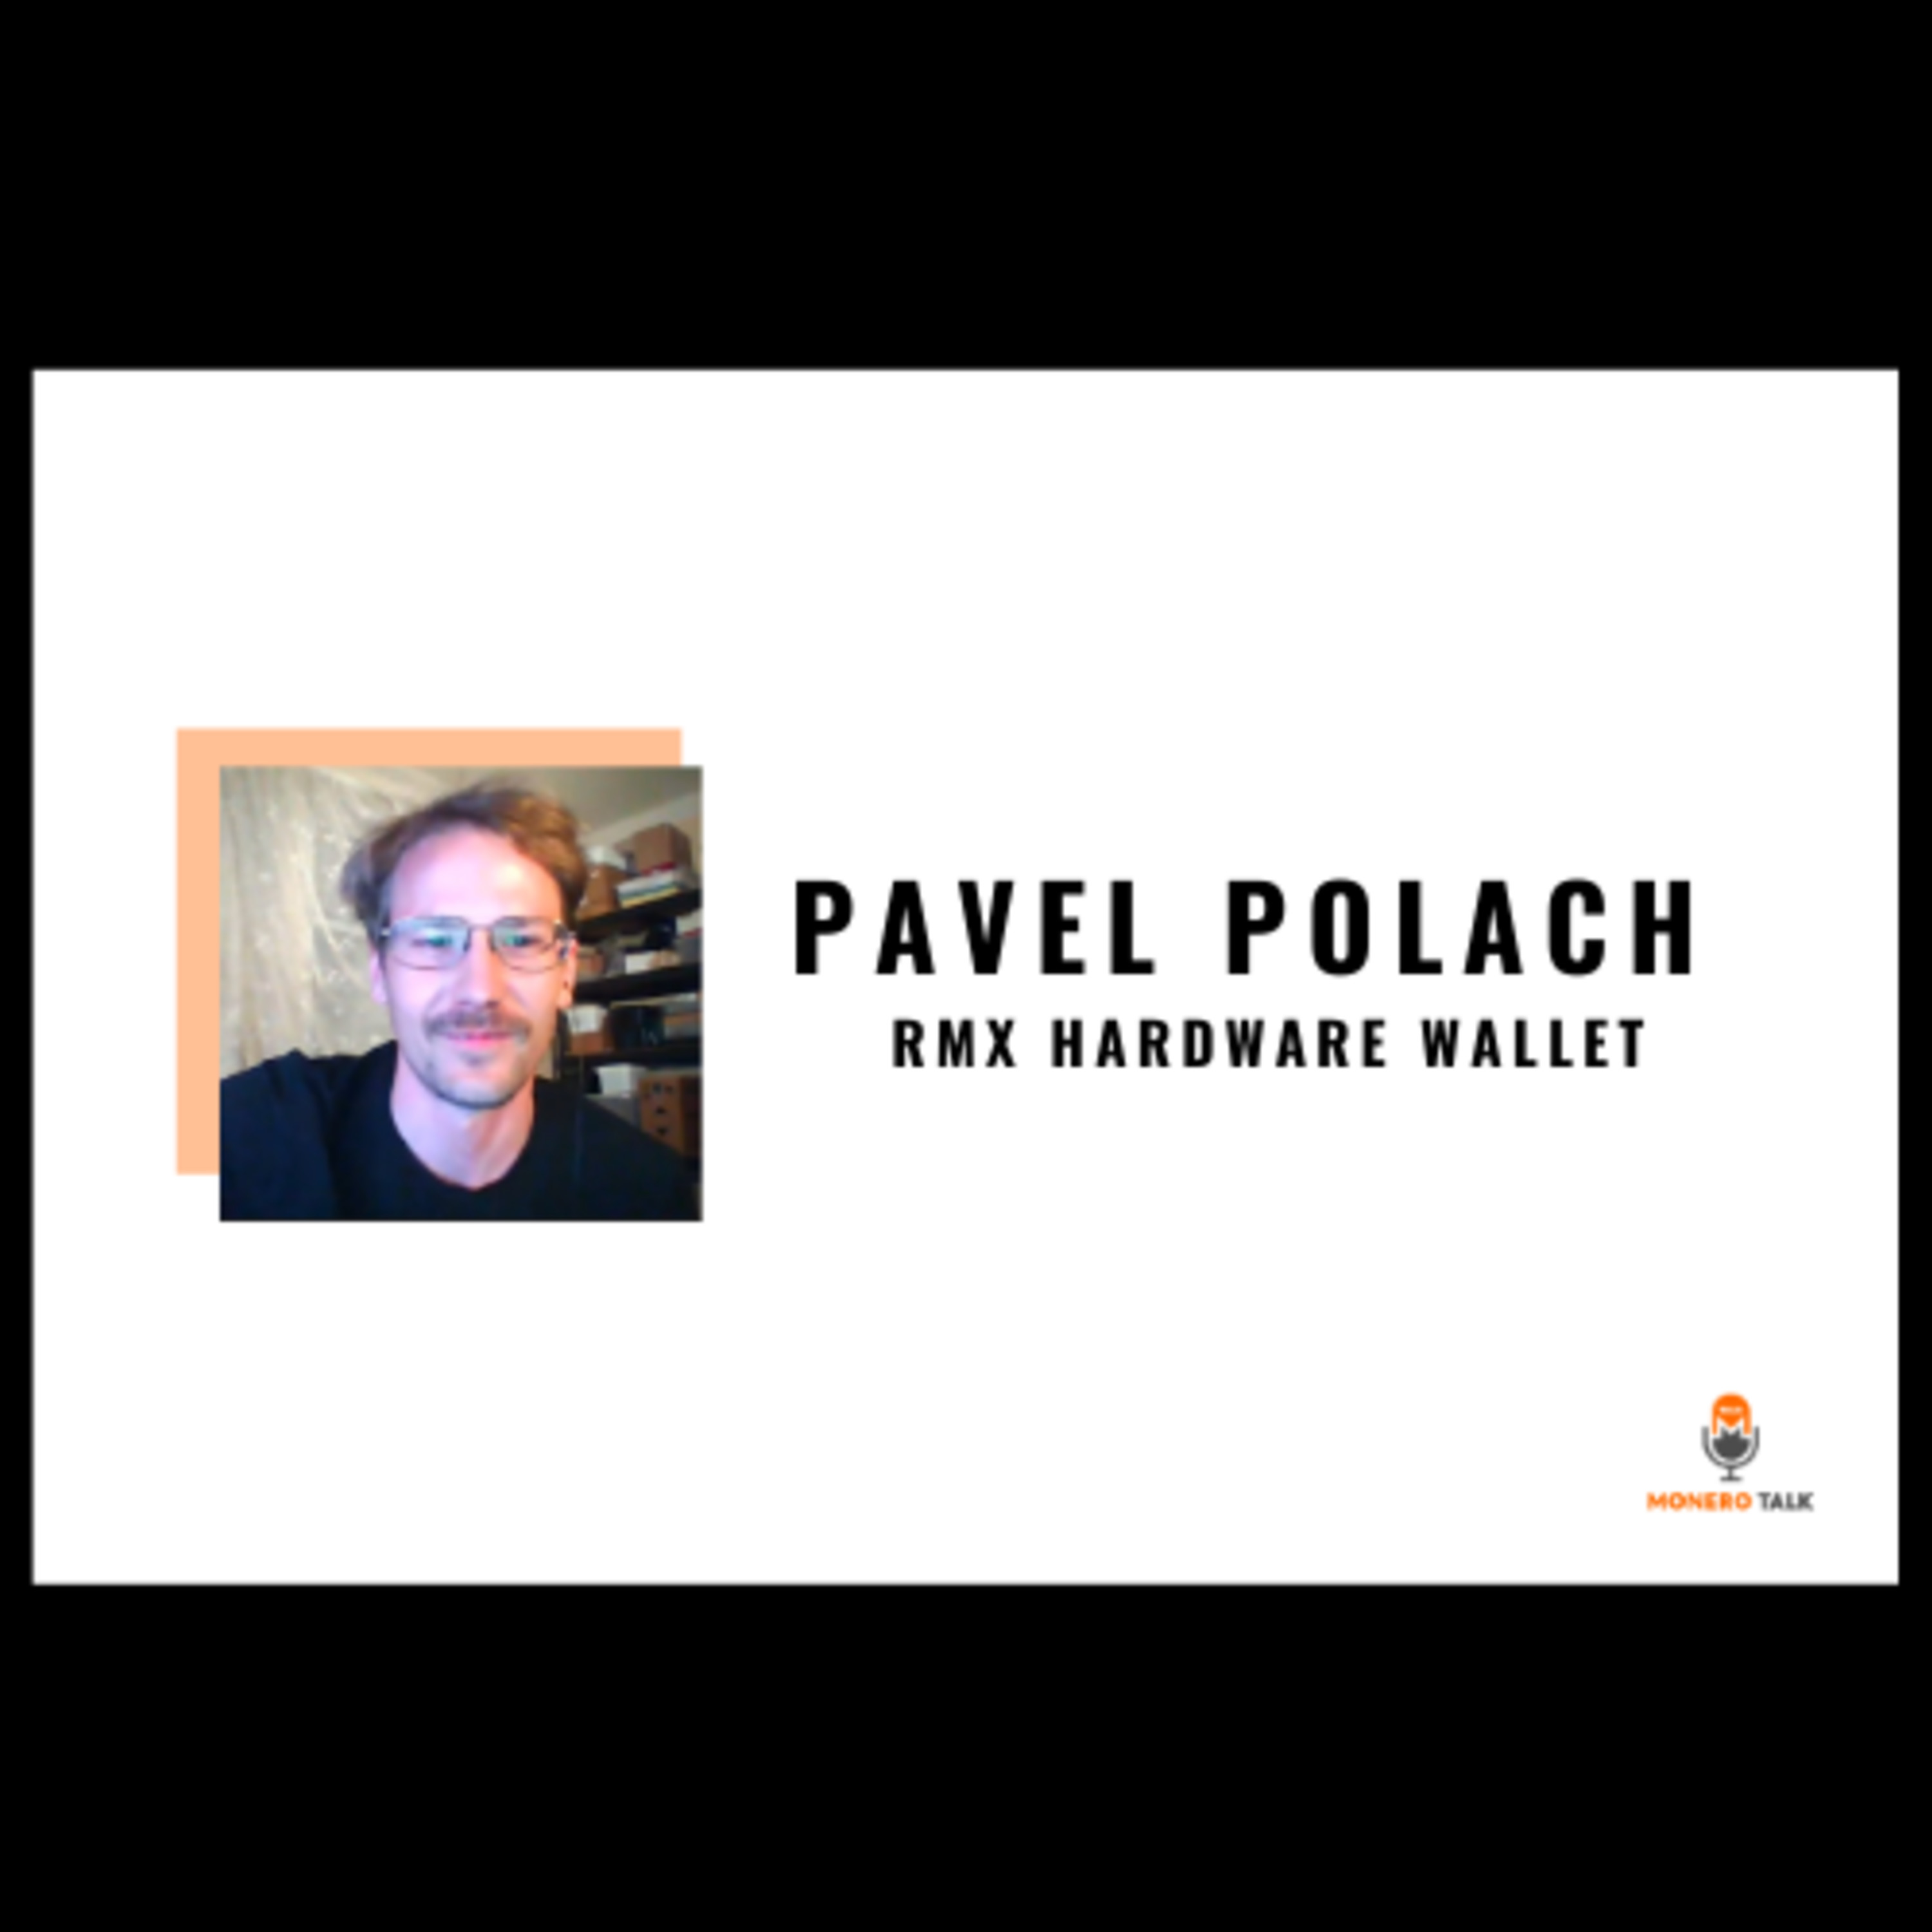 Pavel Polach: RMX Hardware Wallet for Monero